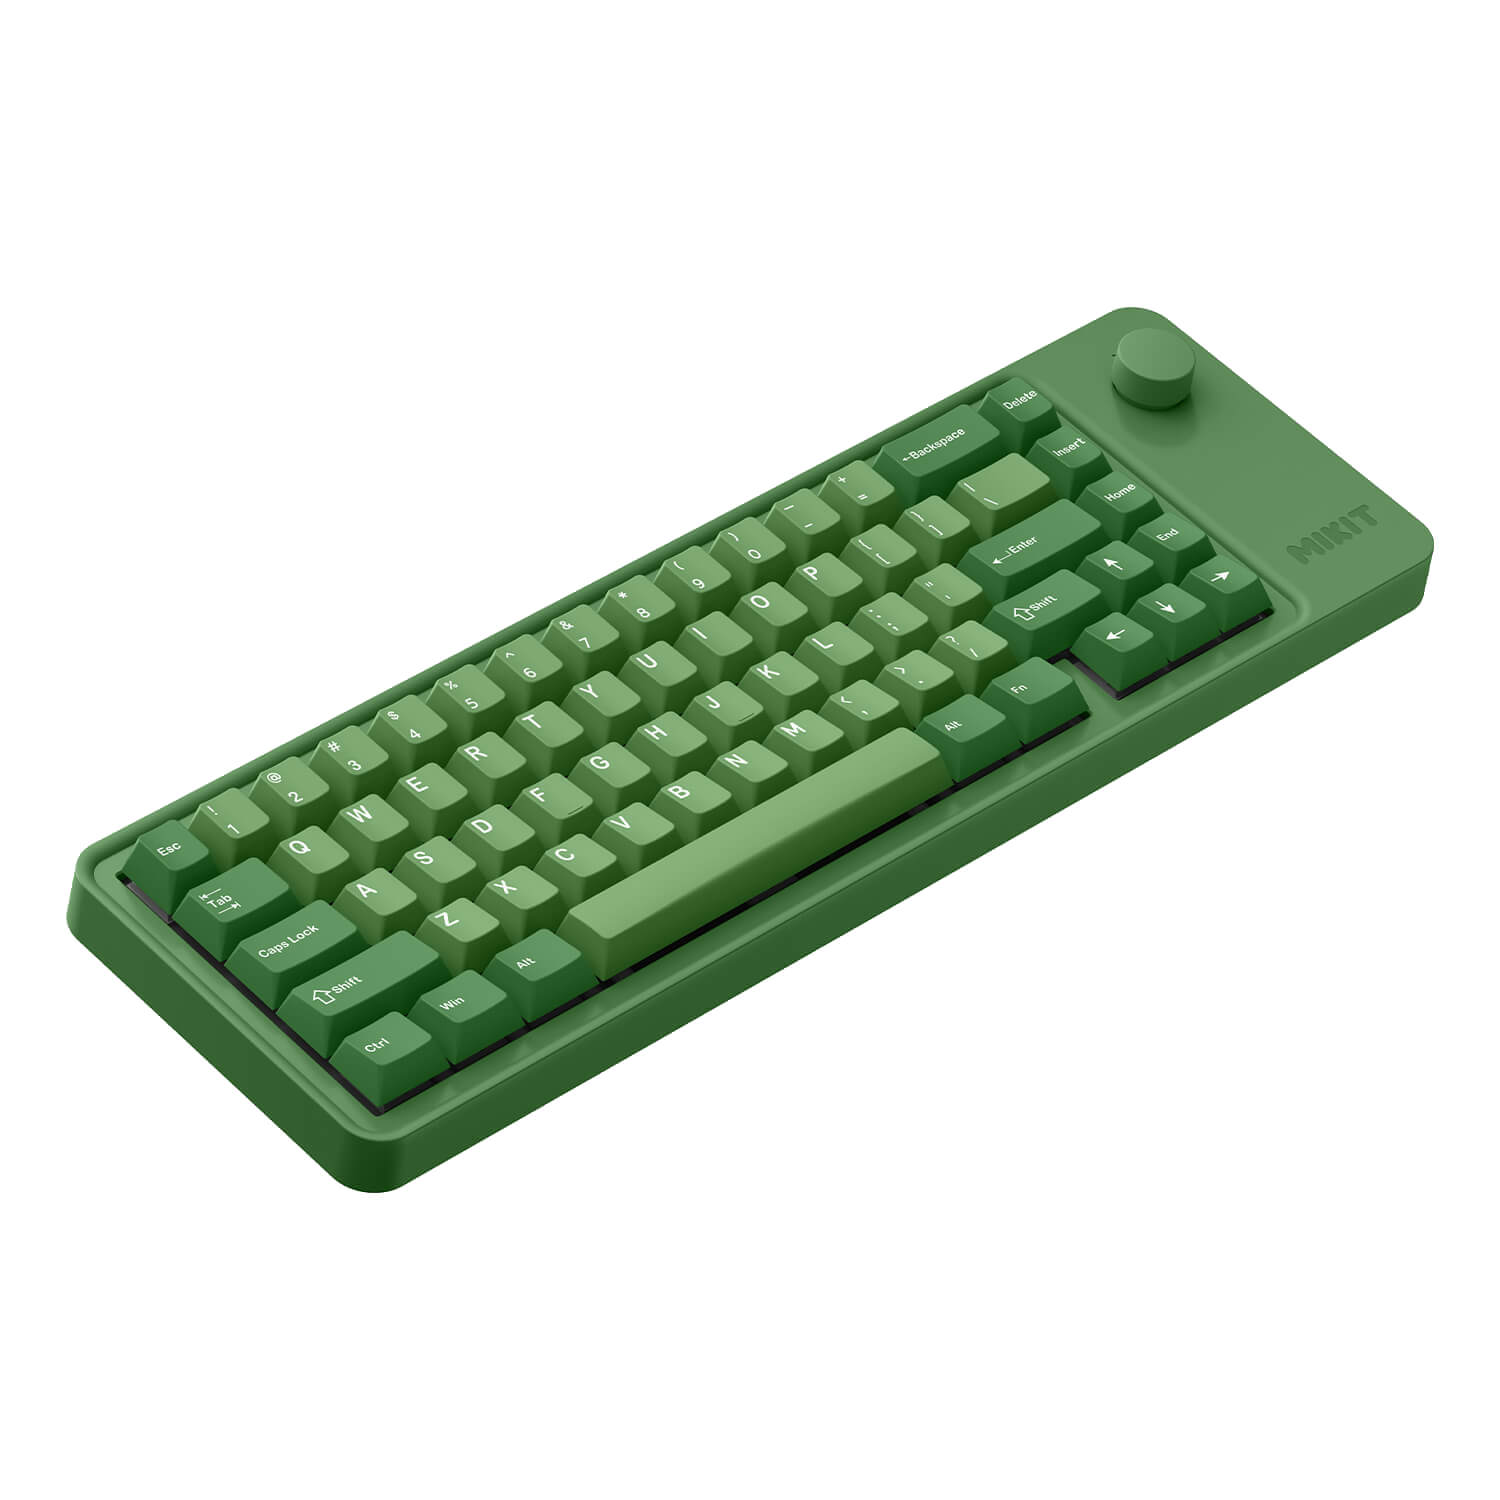 Gasket Mount 65% keyboard High-quality mac keyboard